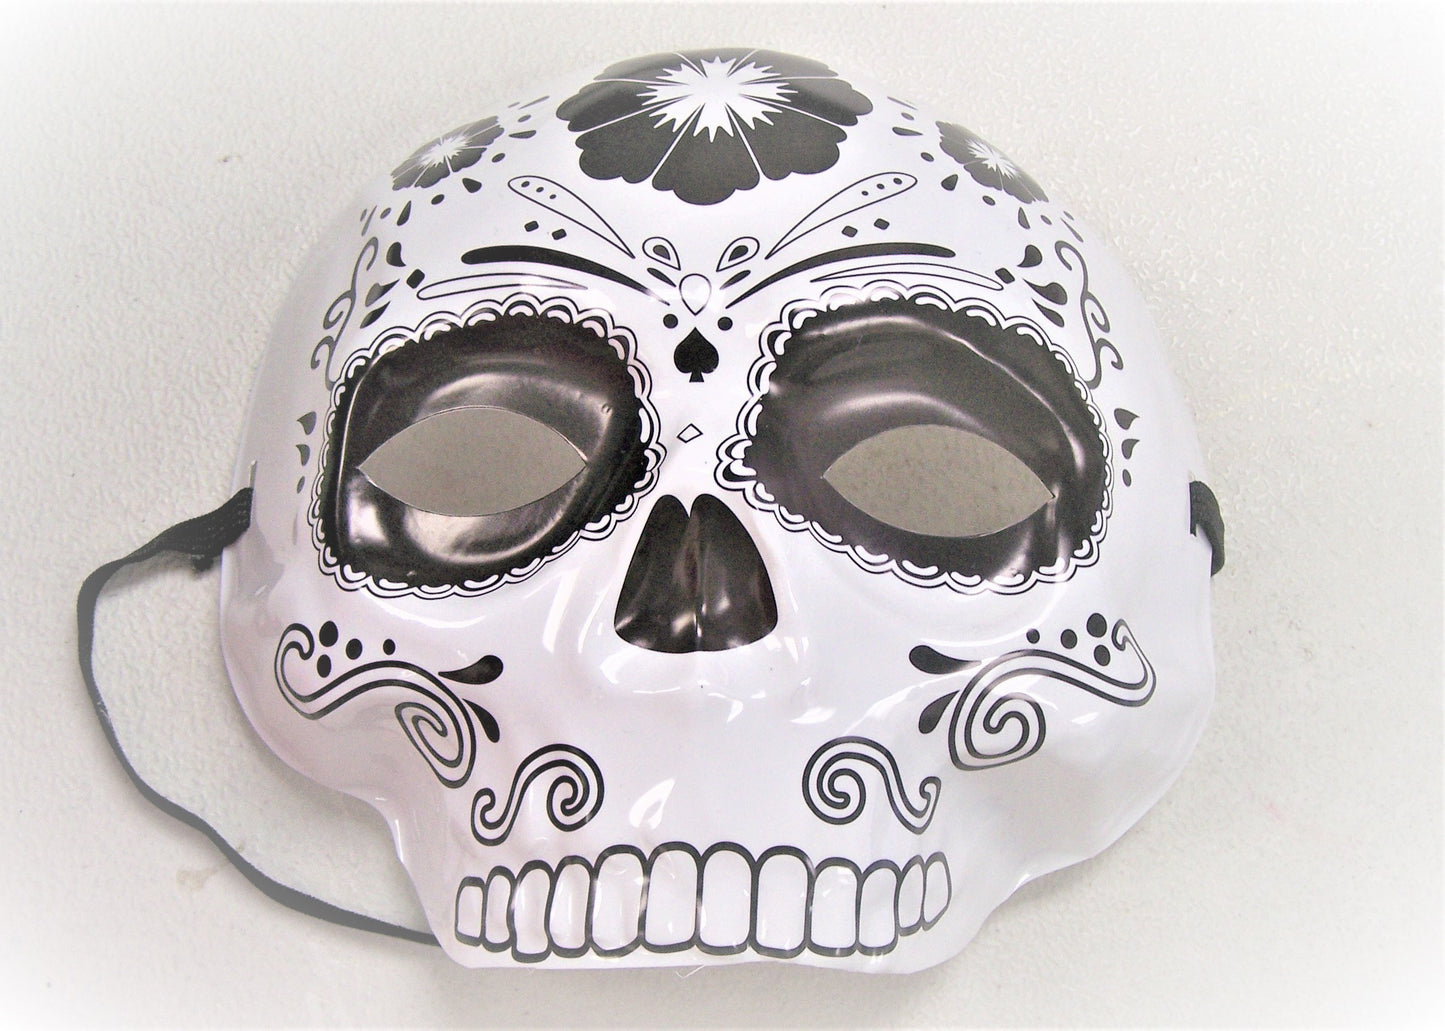 Day of the Dead Sugar Skull Plastic Halloween Mask - Black - Dia de los Muertos